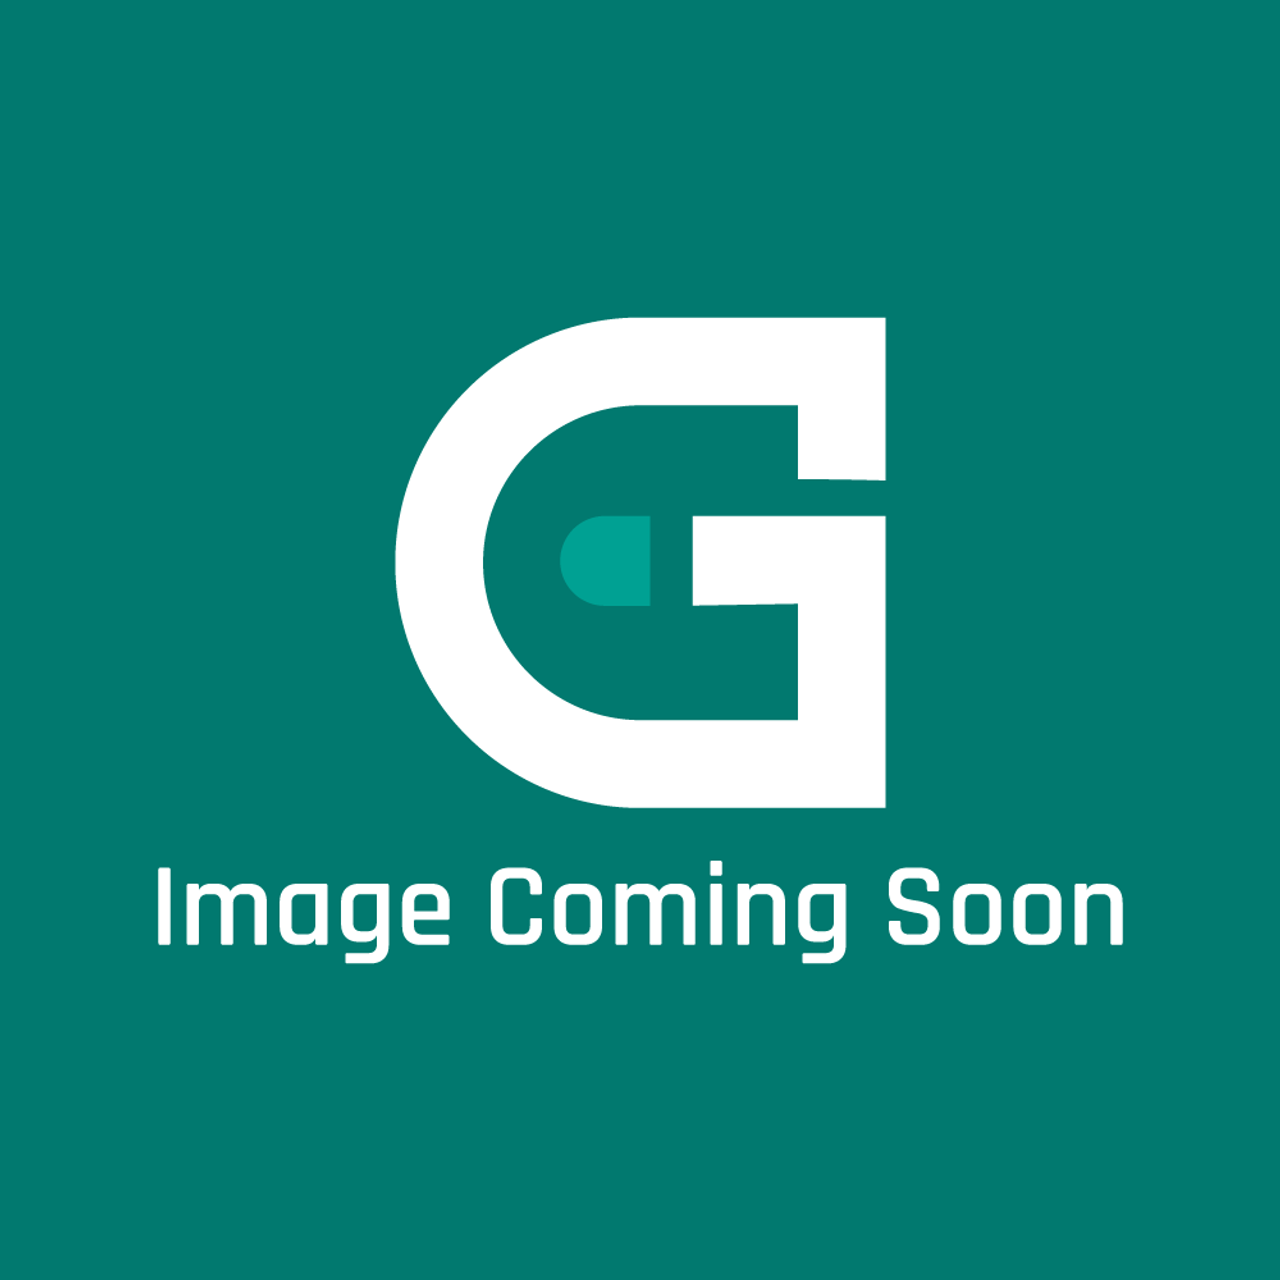 Groen Z092125 - Hose 1/2"Id Pvc Clr K315 0 "Rf" - Image Coming Soon!